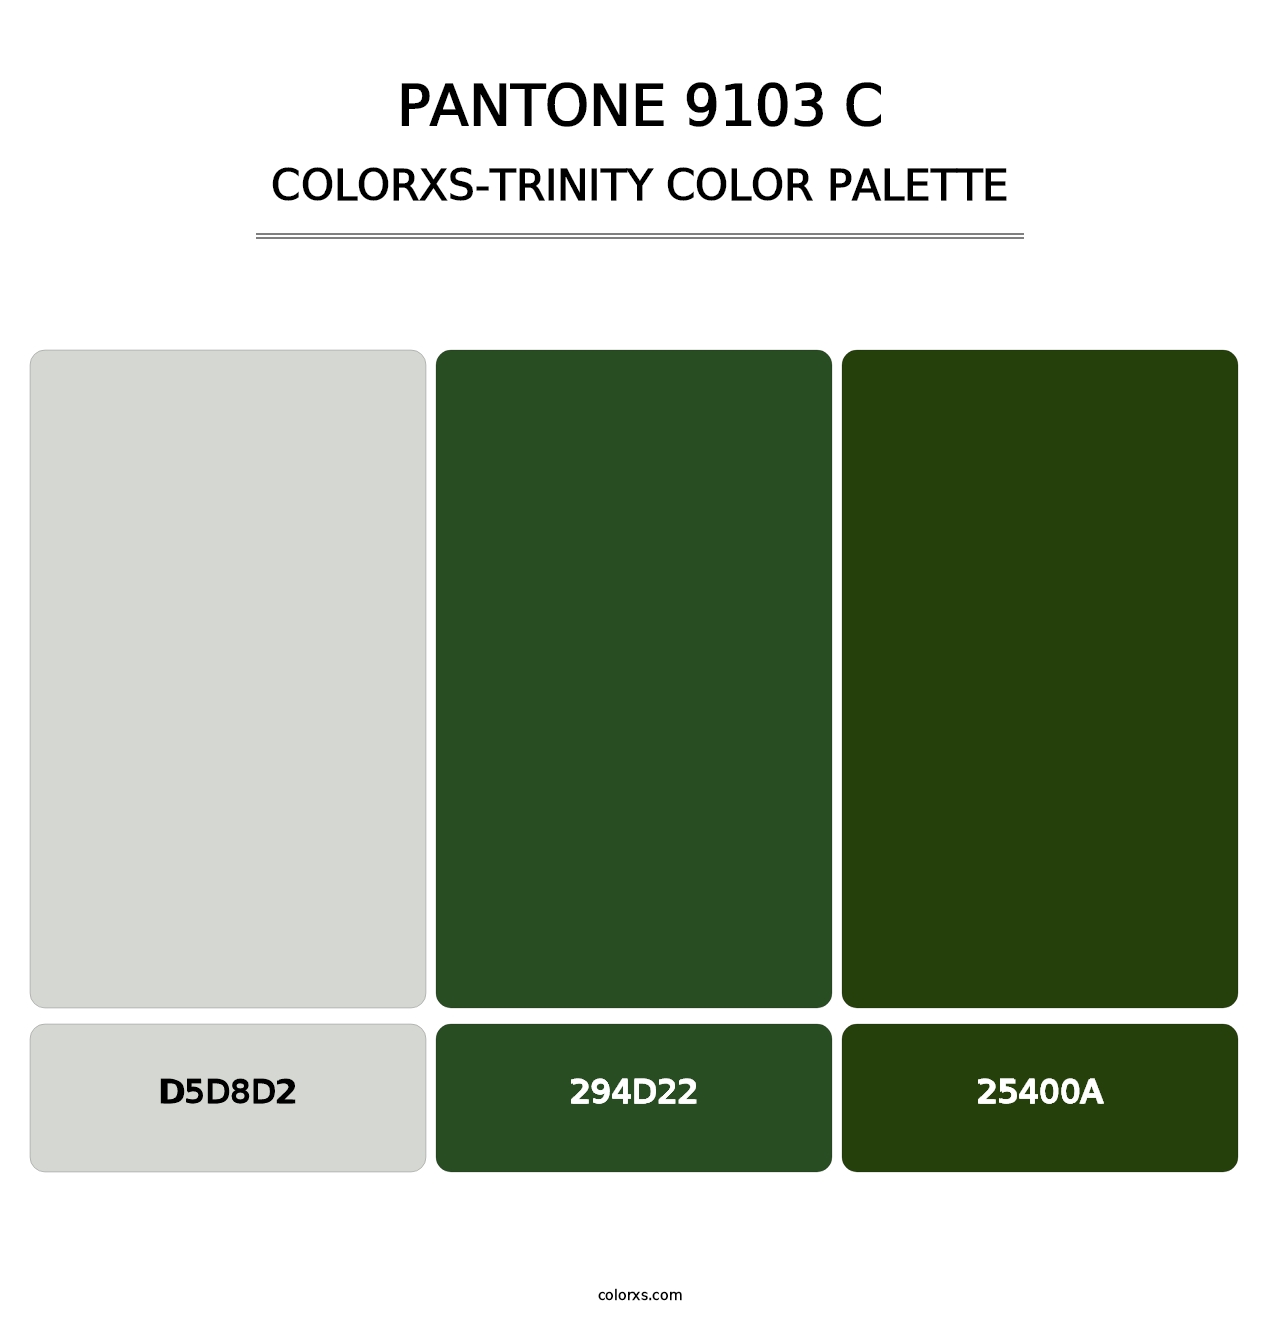 PANTONE 9103 C - Colorxs Trinity Palette